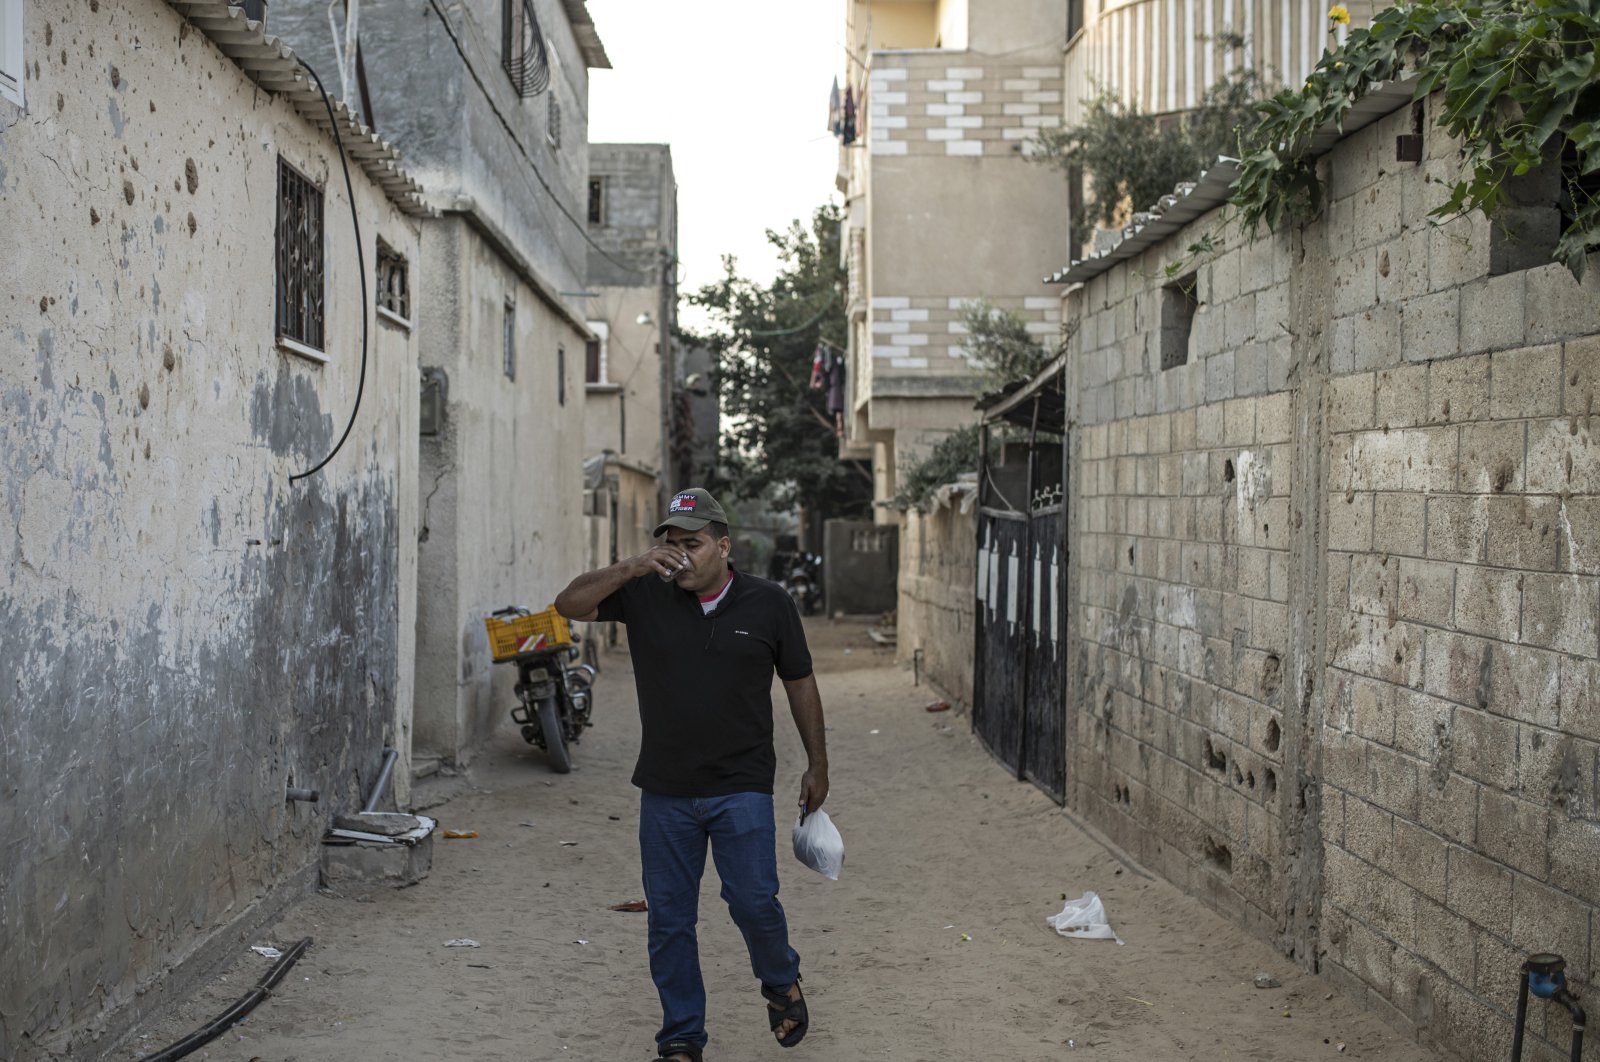 Palestinian Ibrahim Slaieh drinks coffee in the morning before crossing into Israel to work in Beersheba, in Khan Younis southern Gaza Strip, Aug. 21, 2022. (AP Photo)